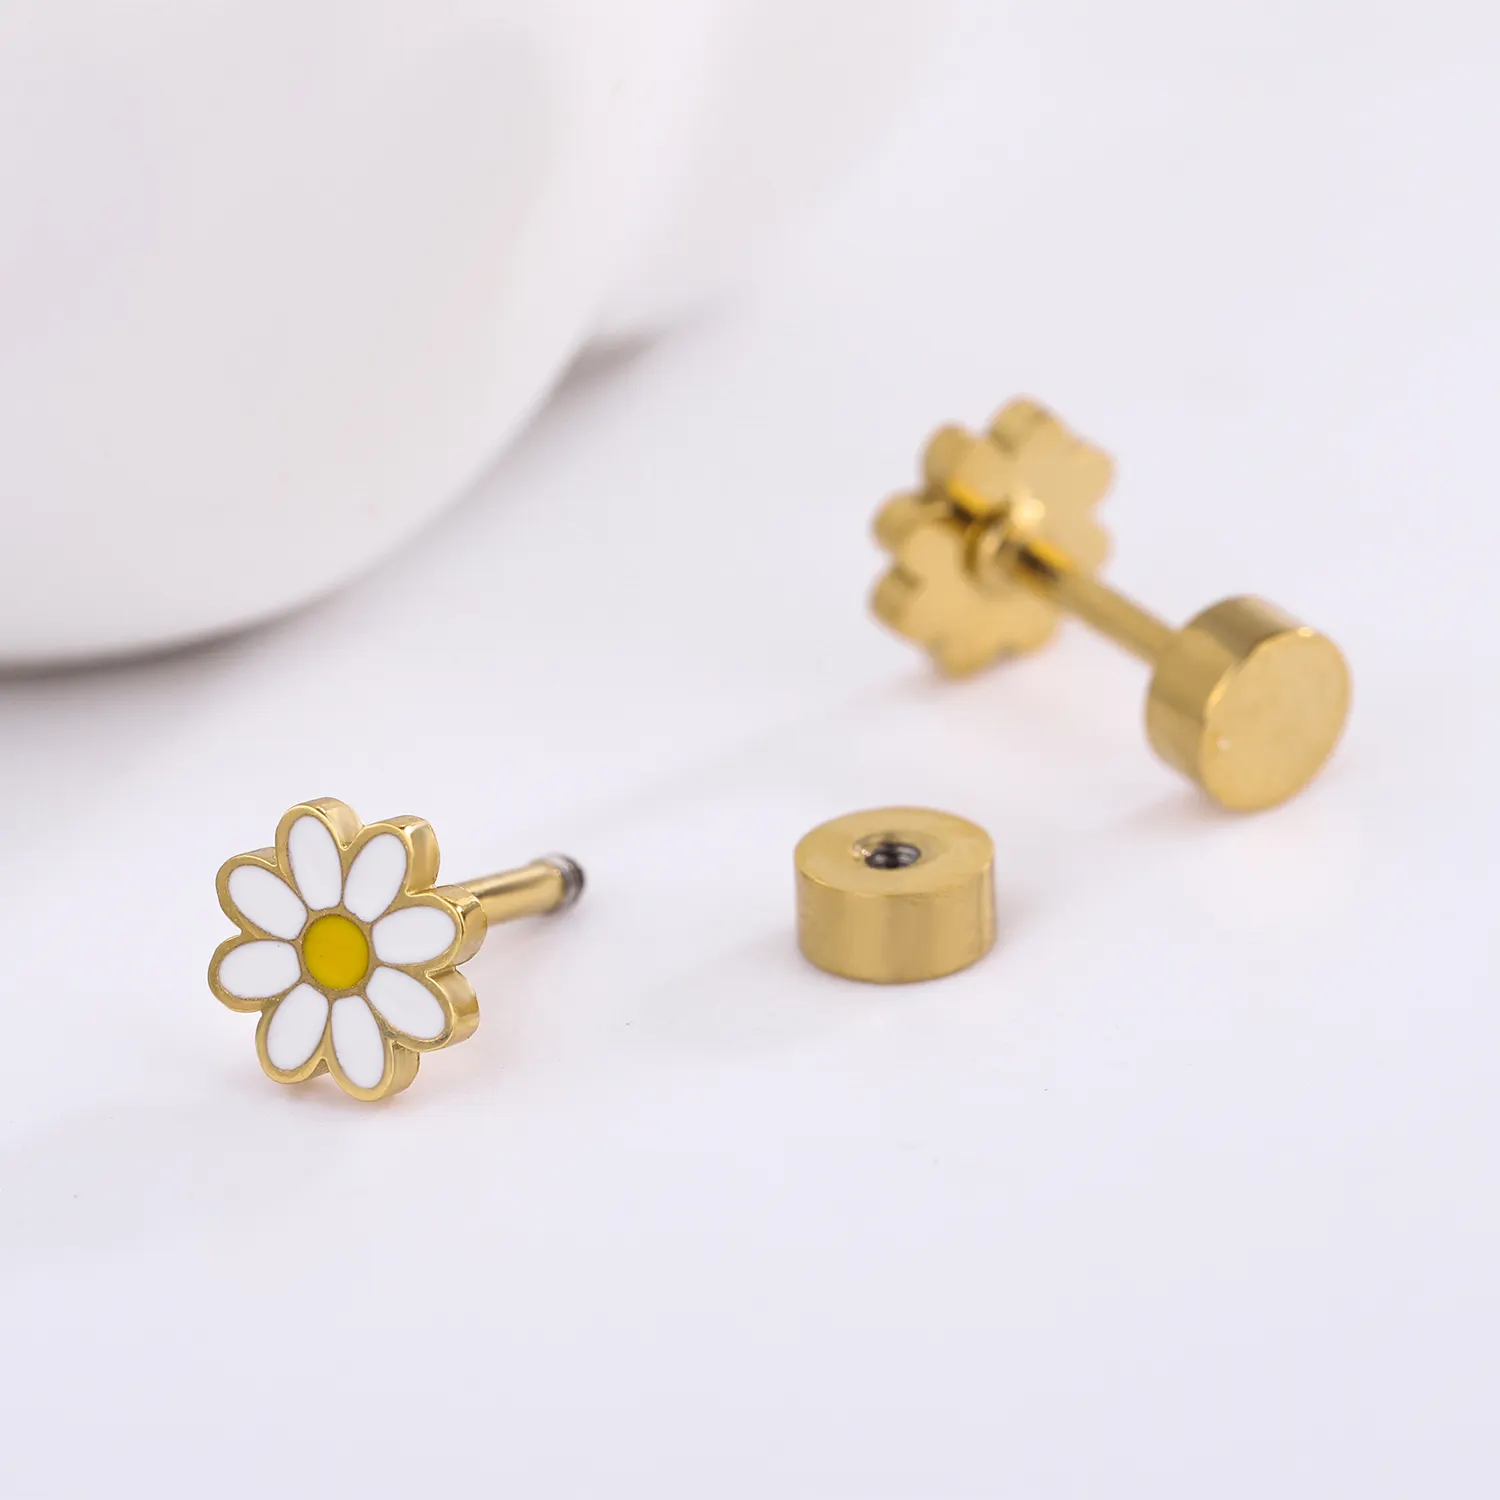 Chrysanthemum cute flower enamel stud earrings 18K golden stainless steel jewelry for children women girls